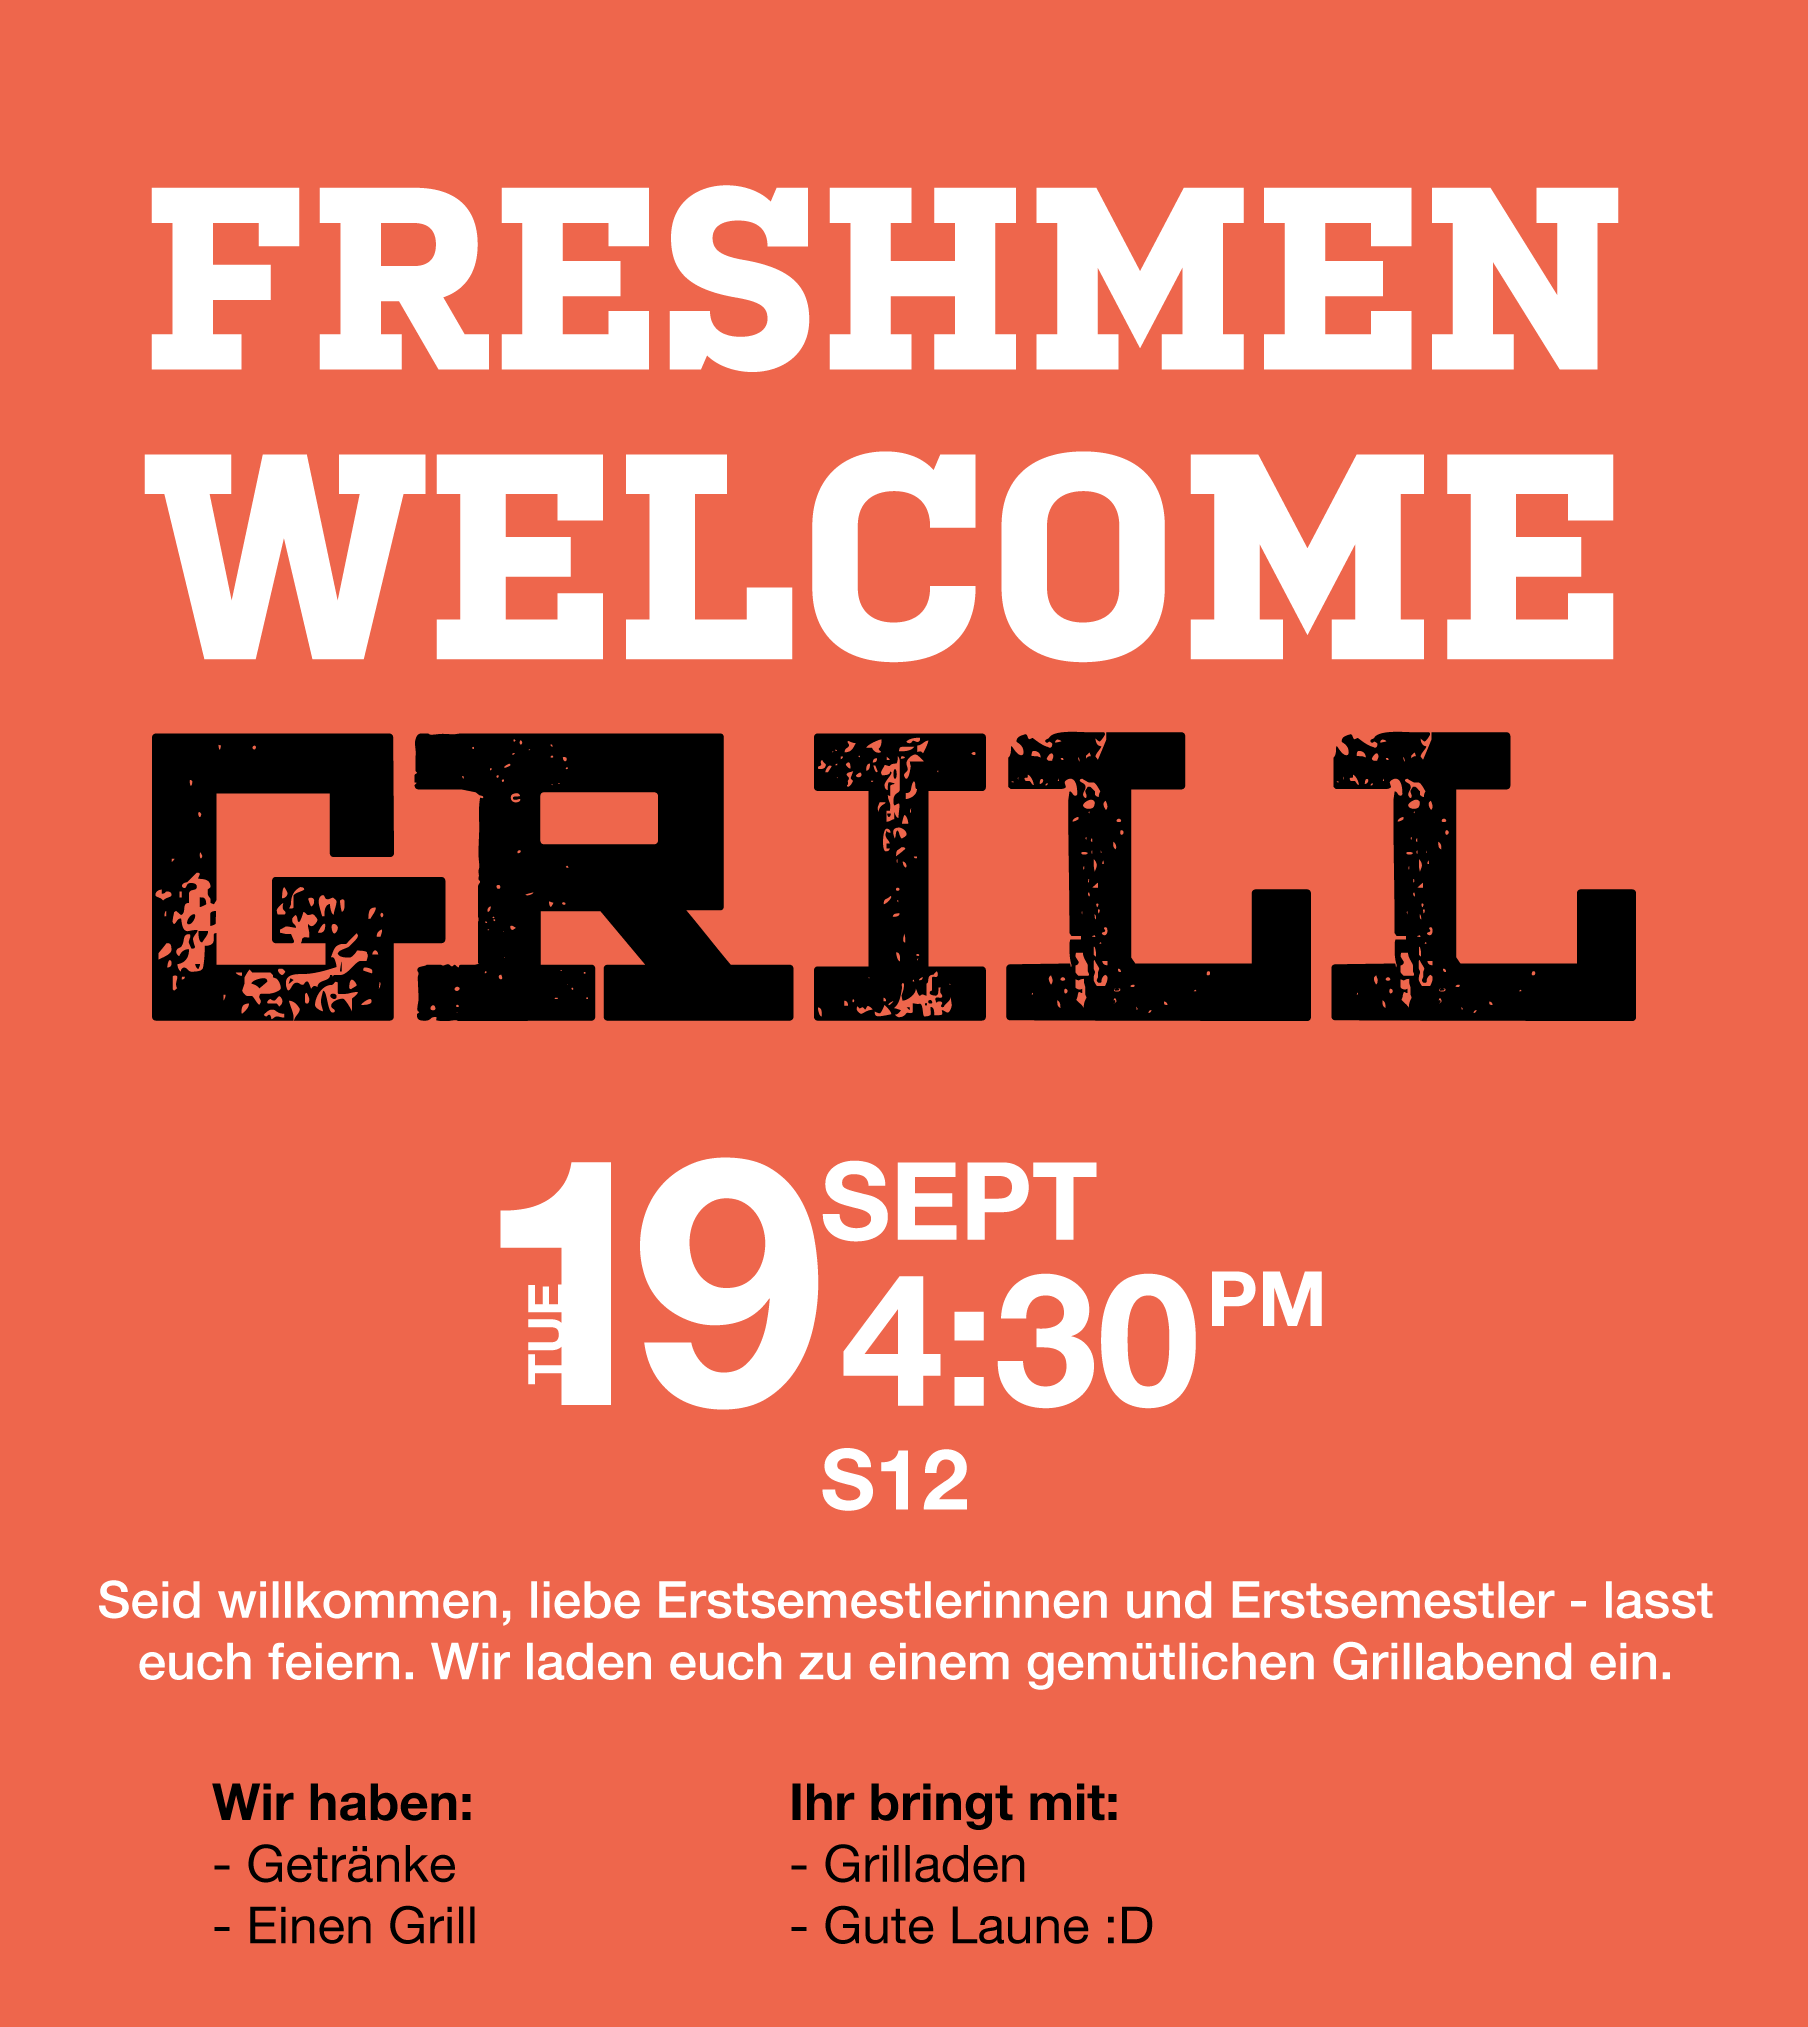 Freshmen Welcome Grill